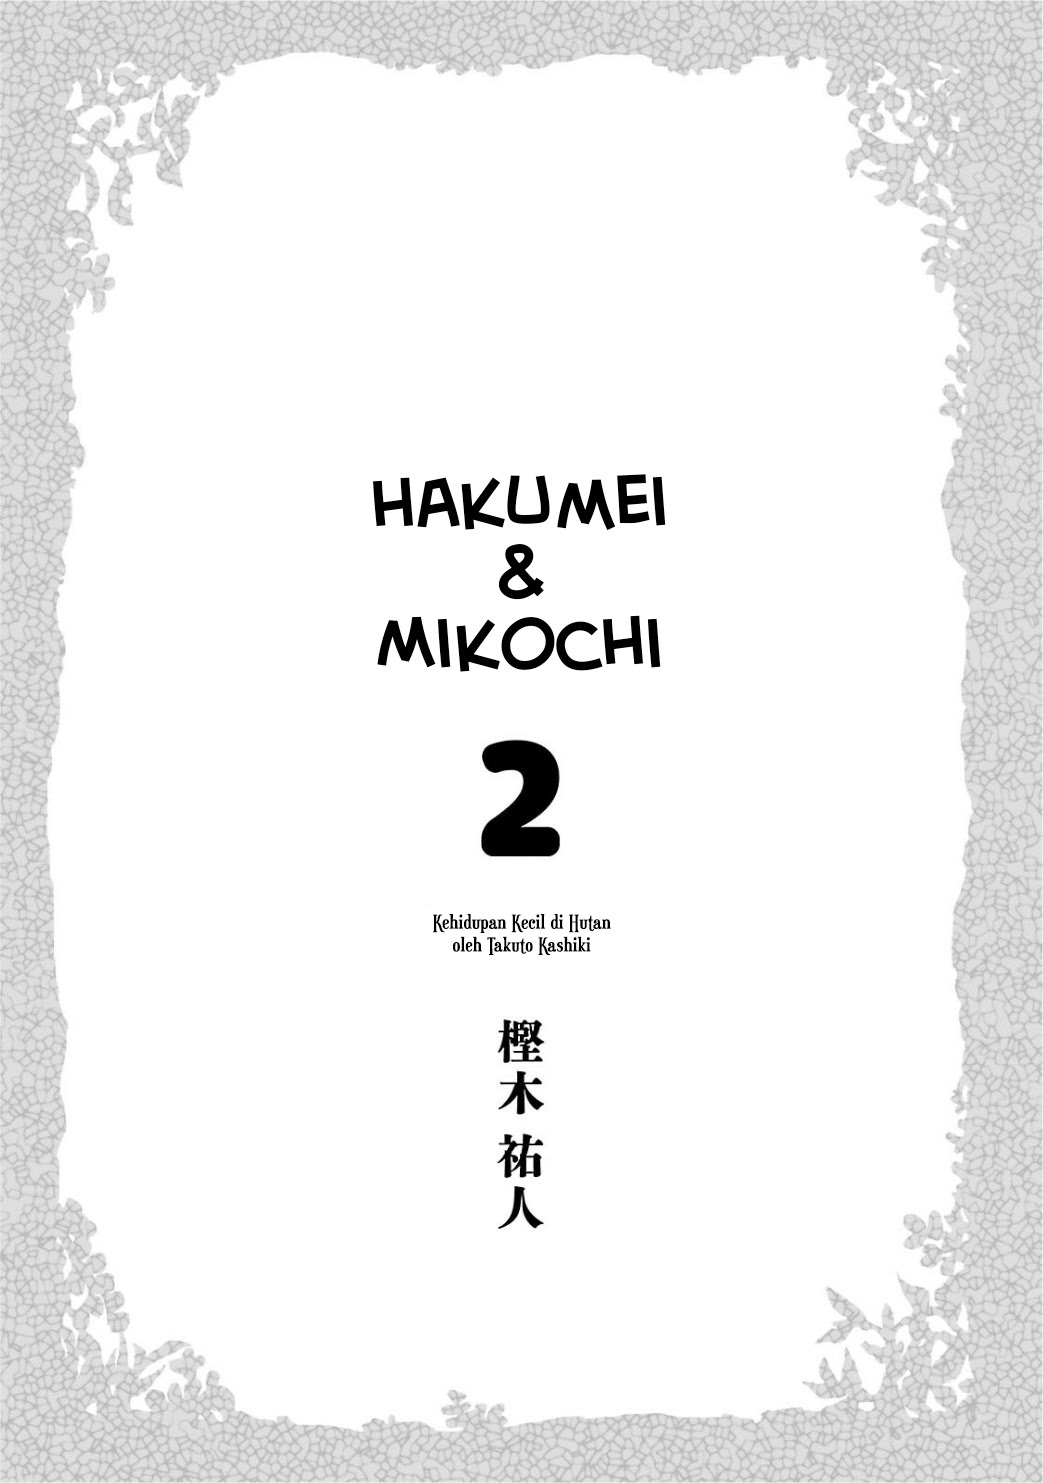 Hakumei to Mikochi Chapter 9